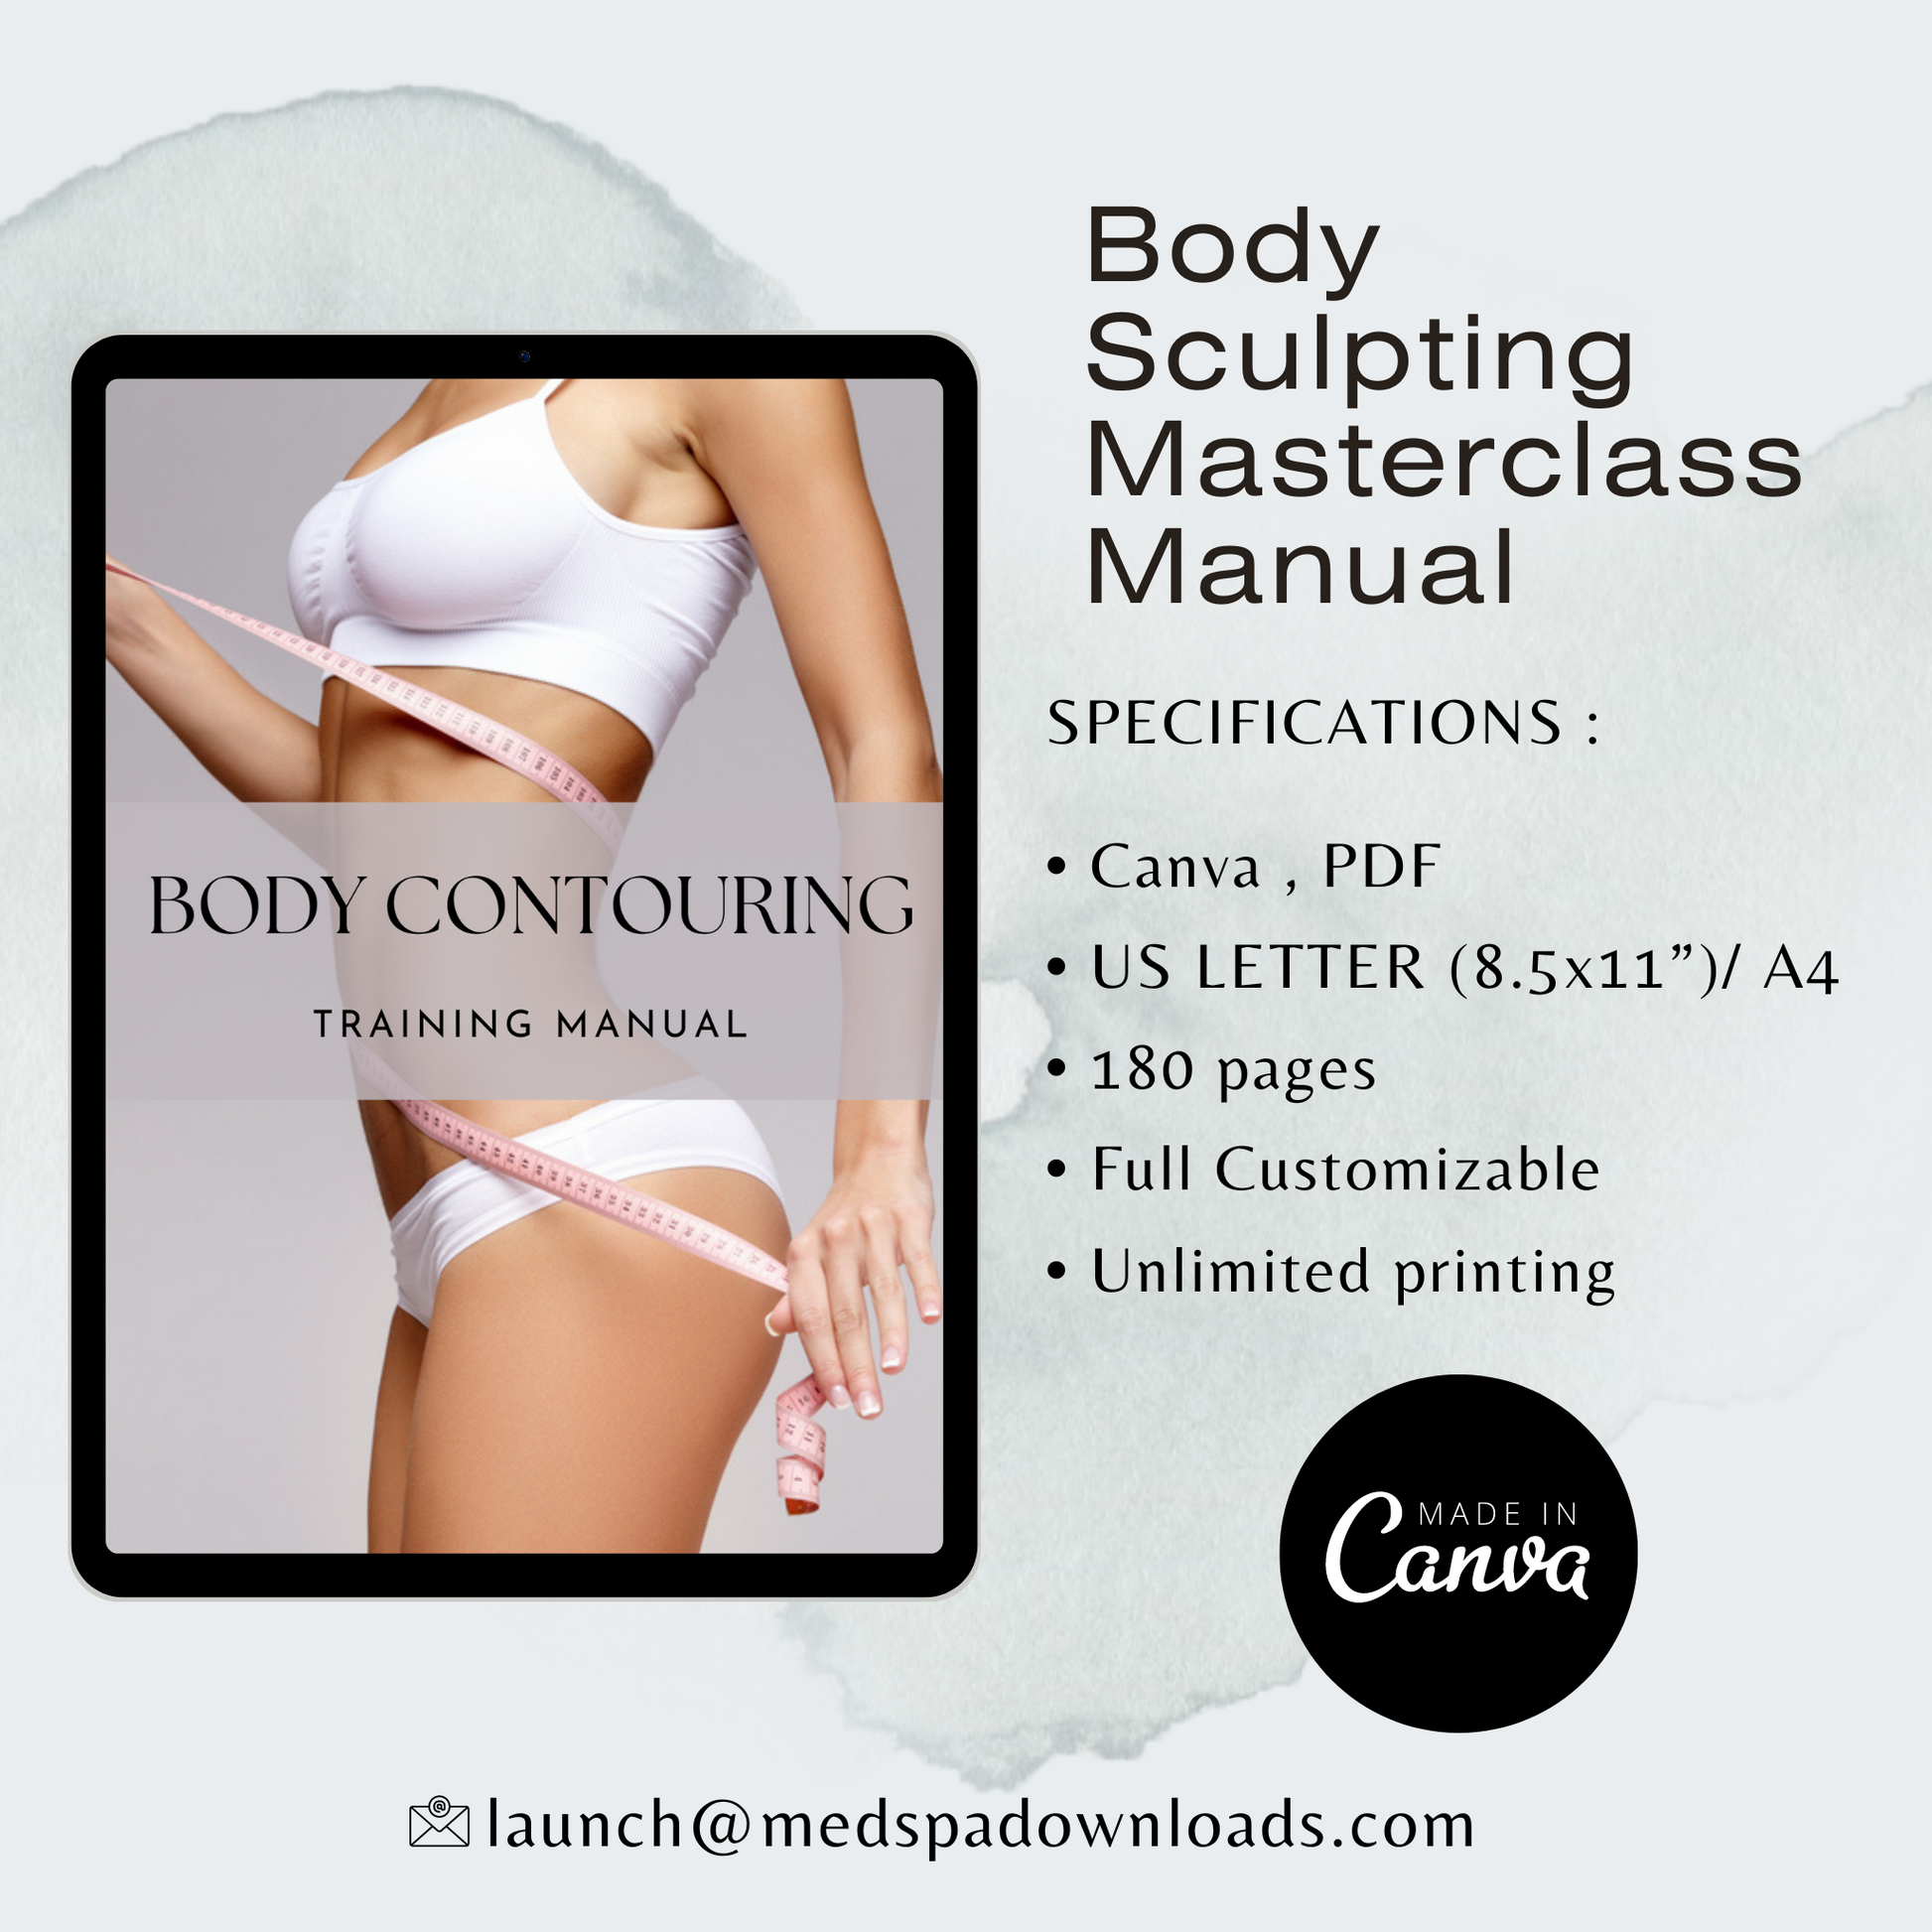 Body Contouring Training Manual